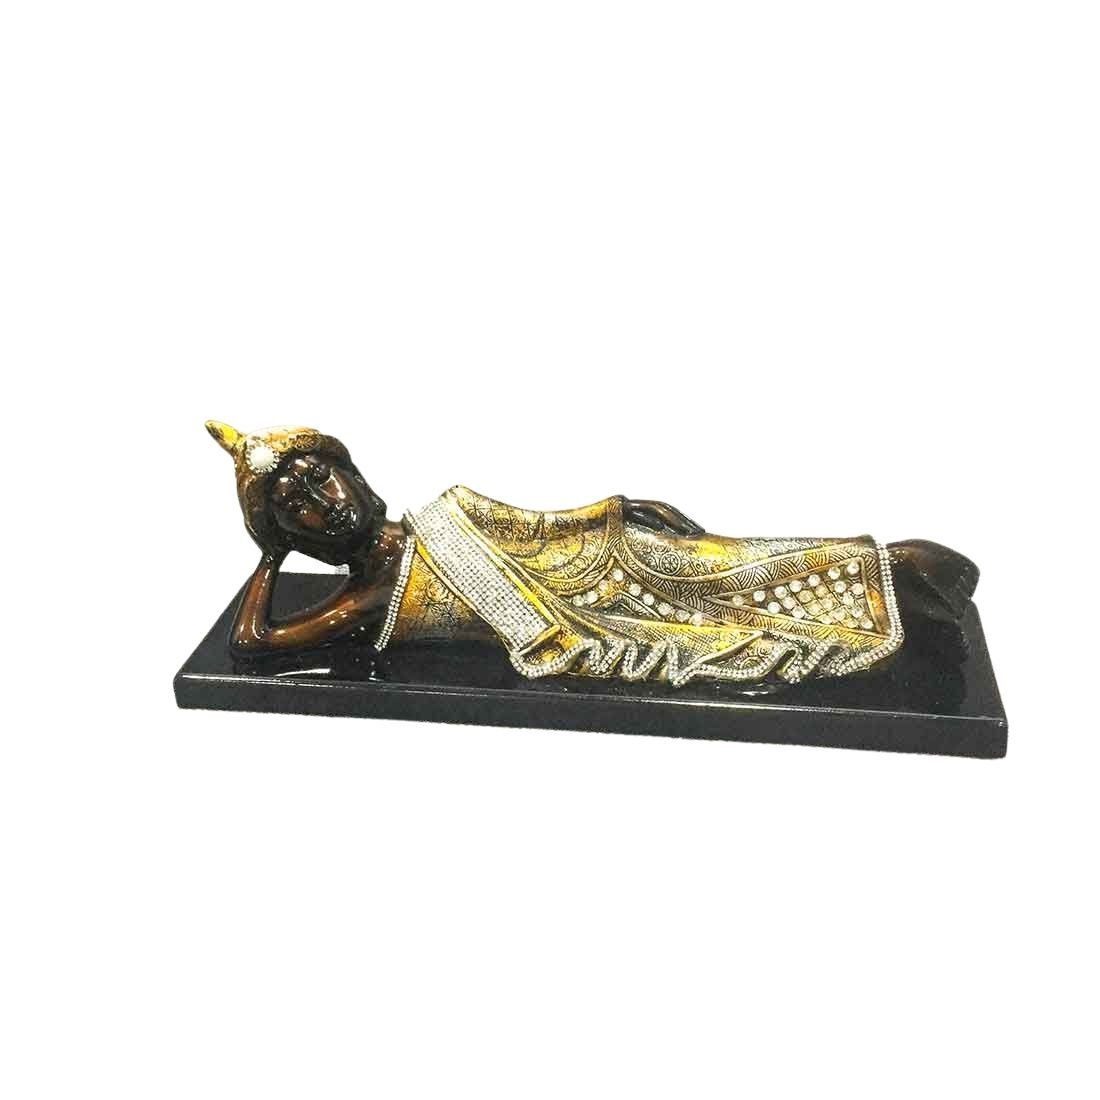 Sleeping Buddha Statue - for Desk Decor & Gifts - 14 Inch - ApkaMart